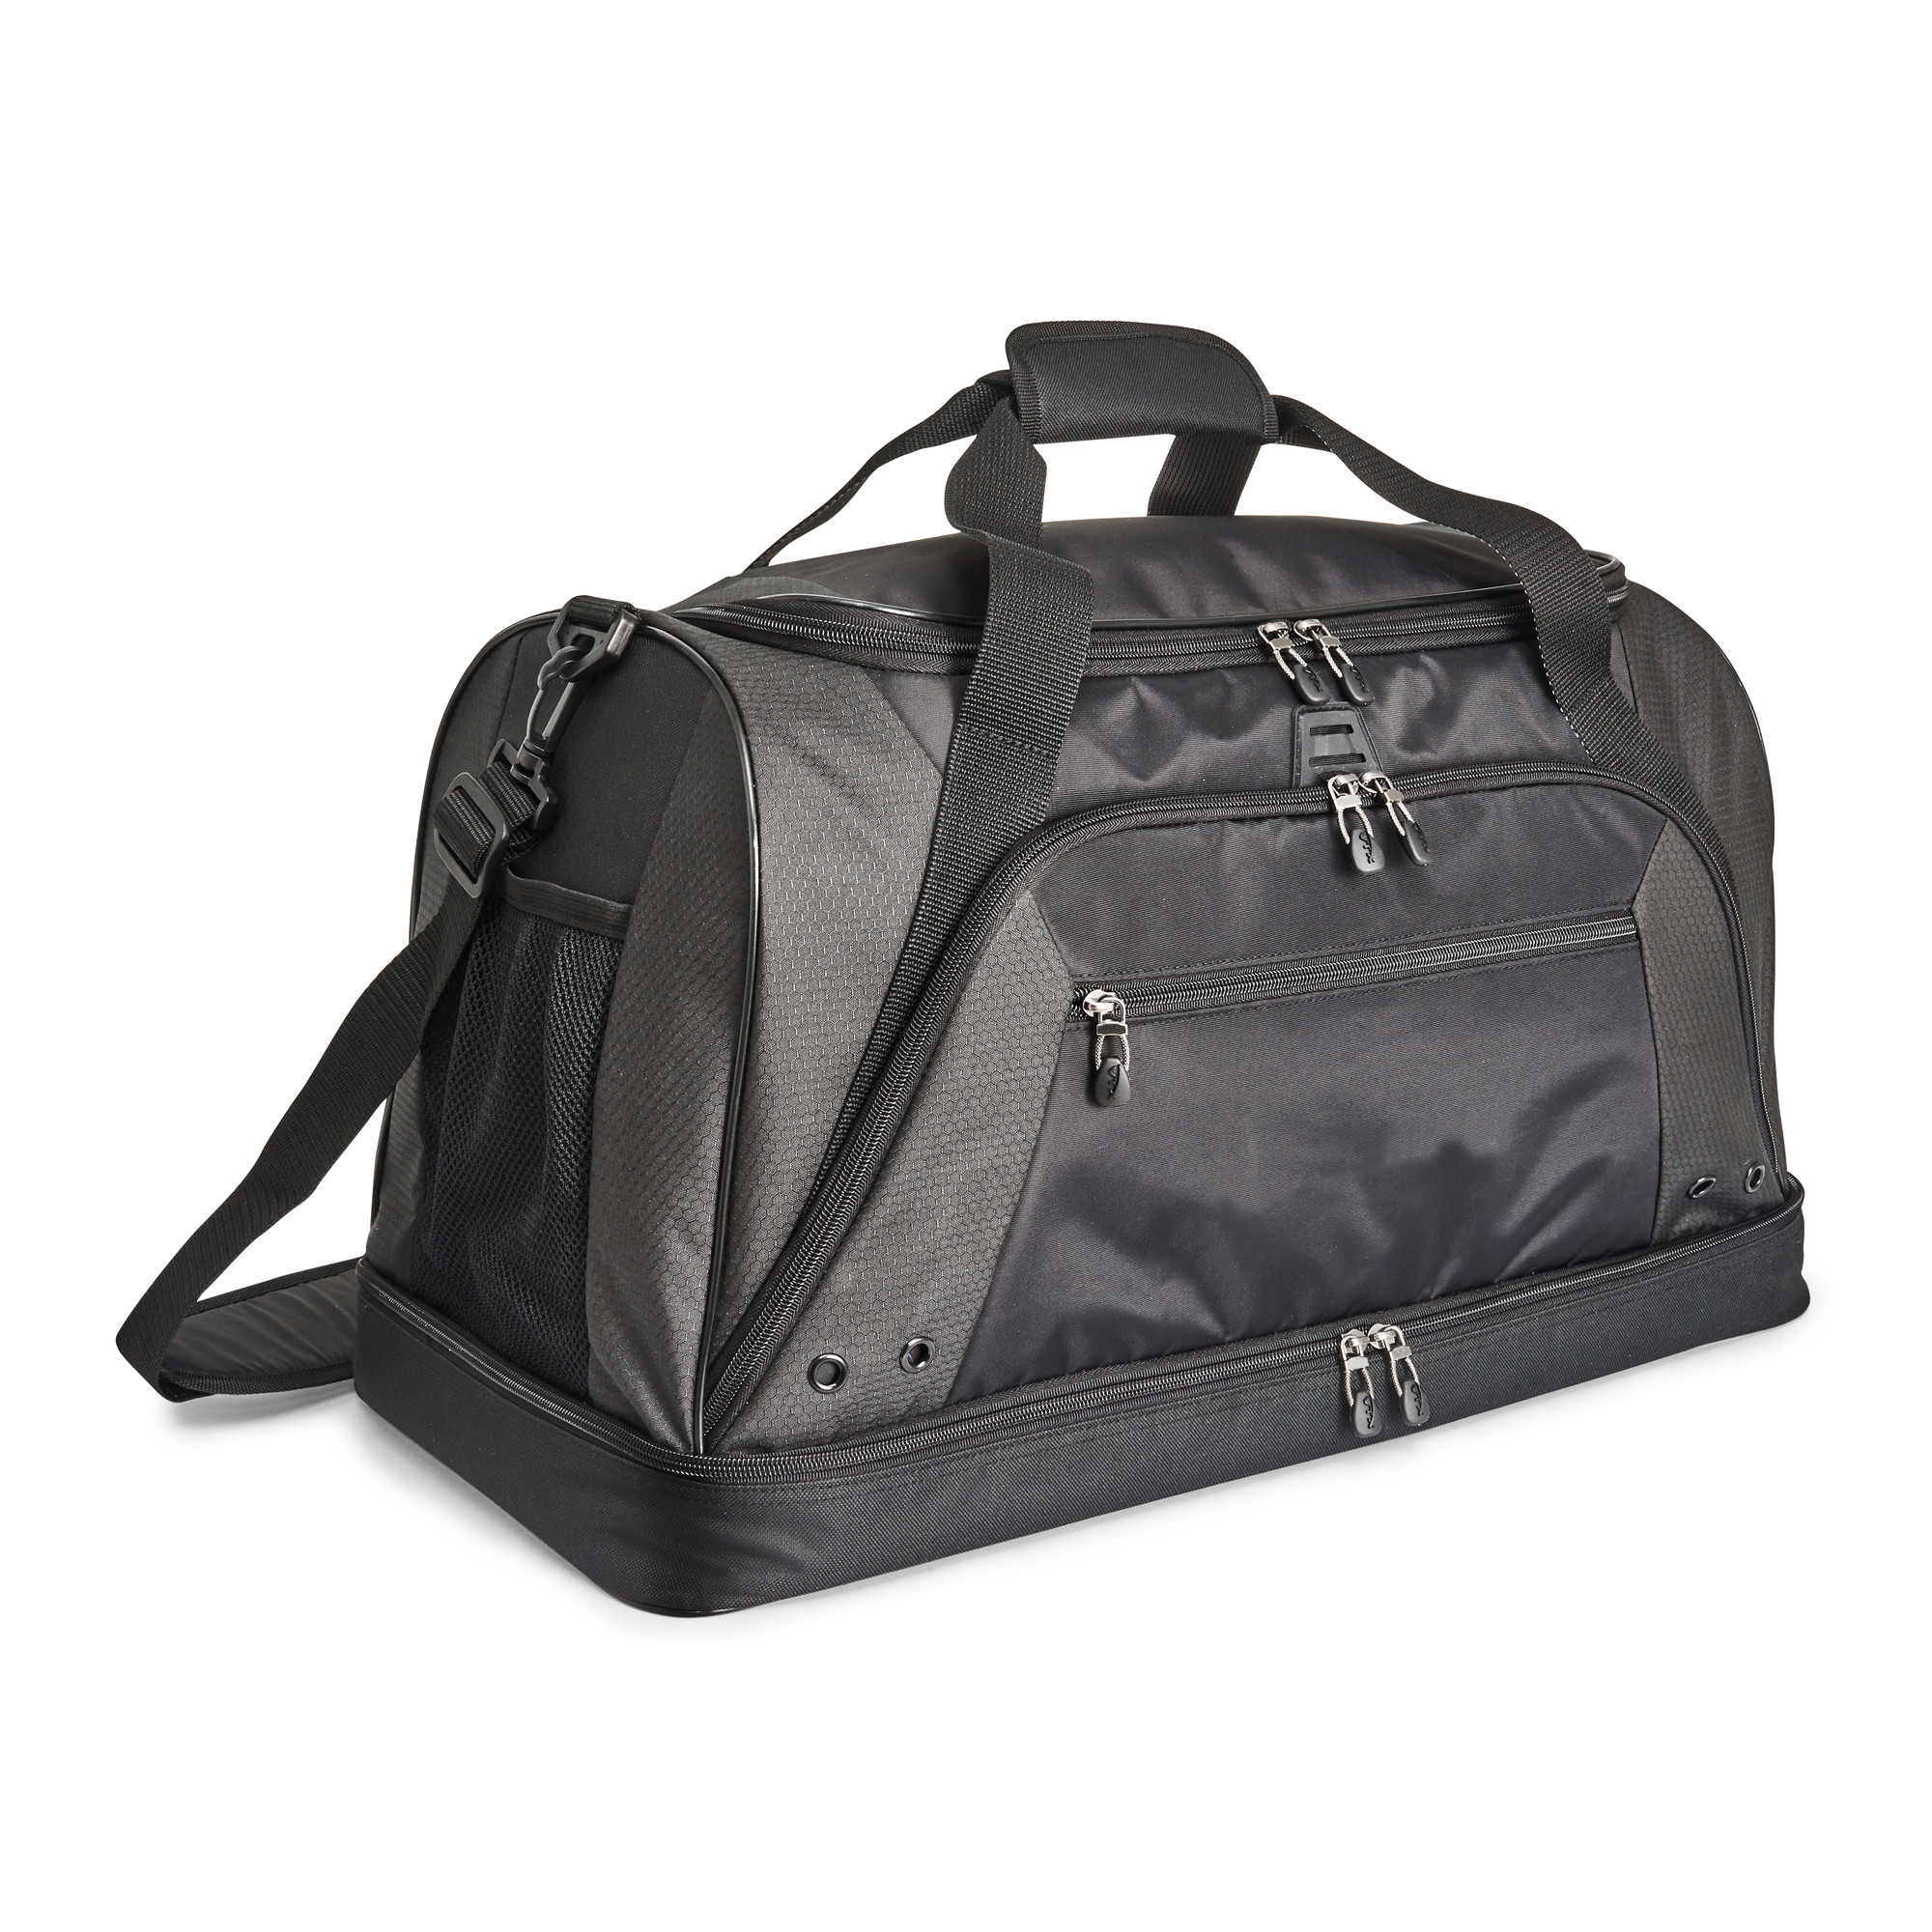 Vertex 4262 - Commander Travel Bag $31.25